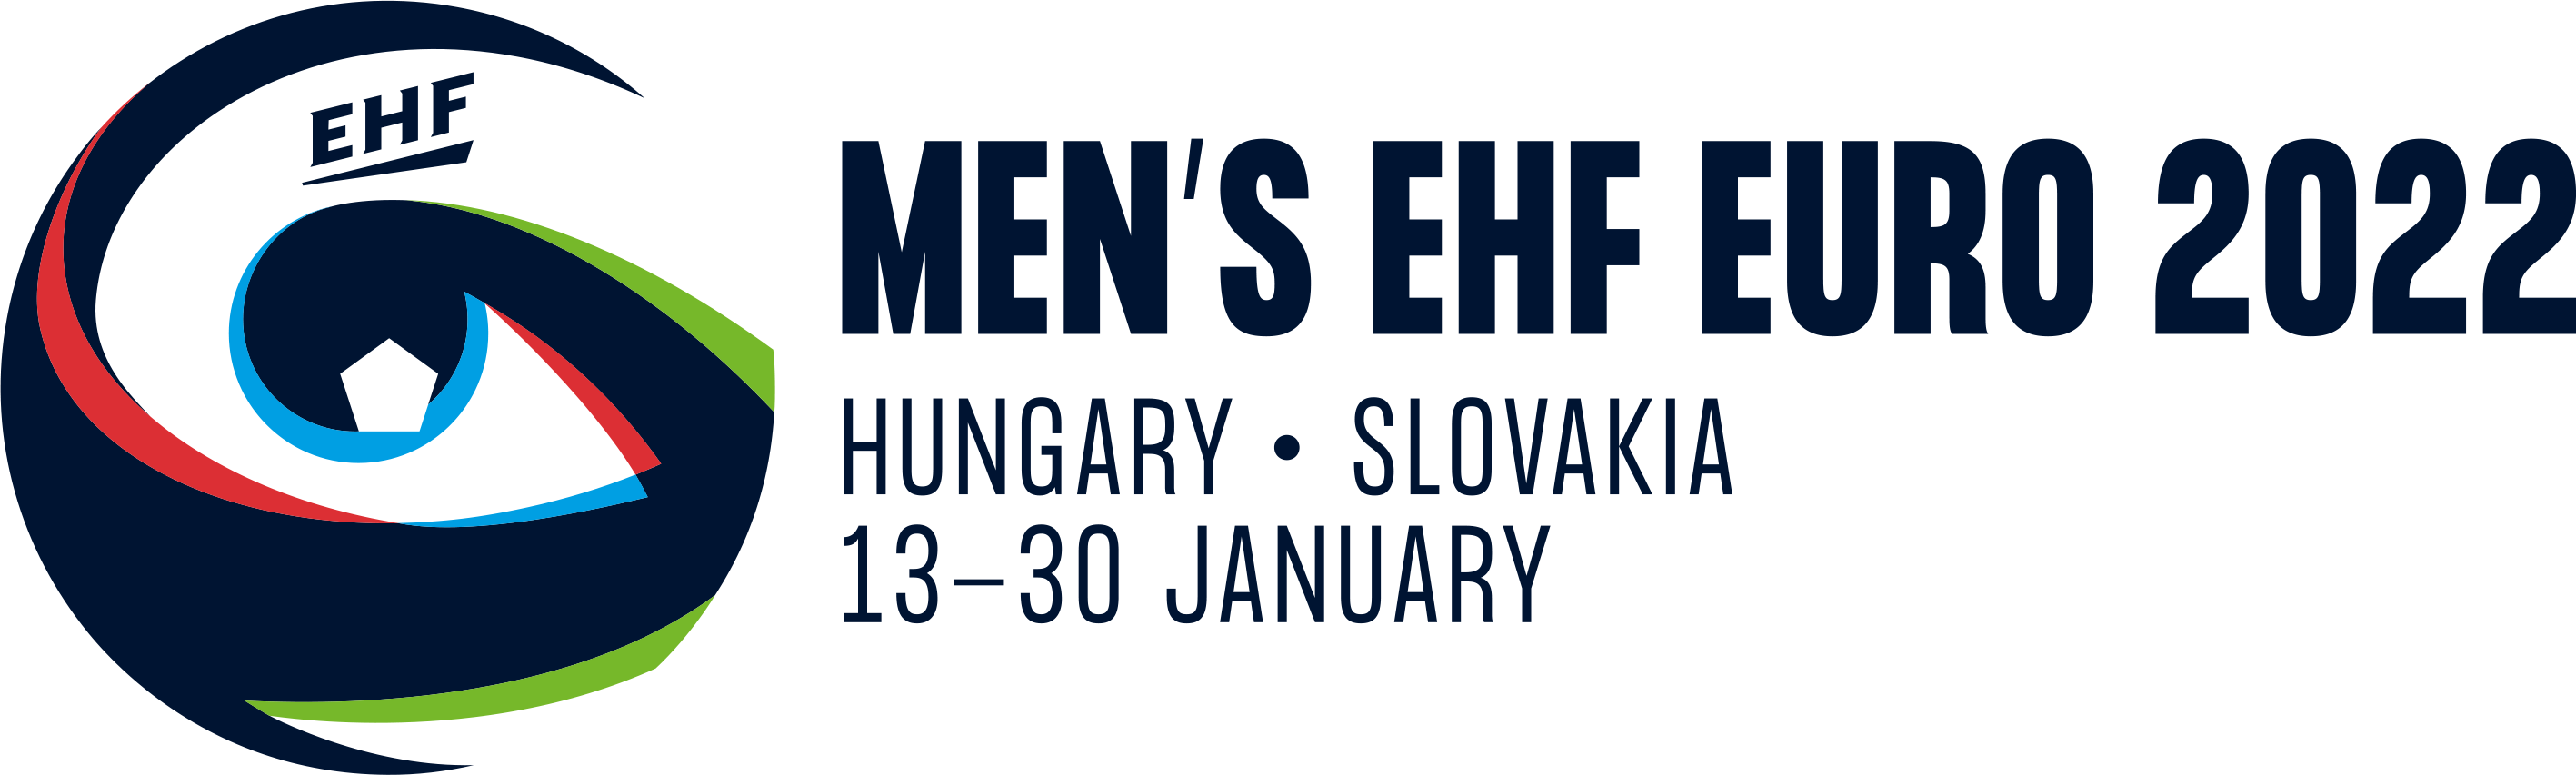 EHF Euro 2022